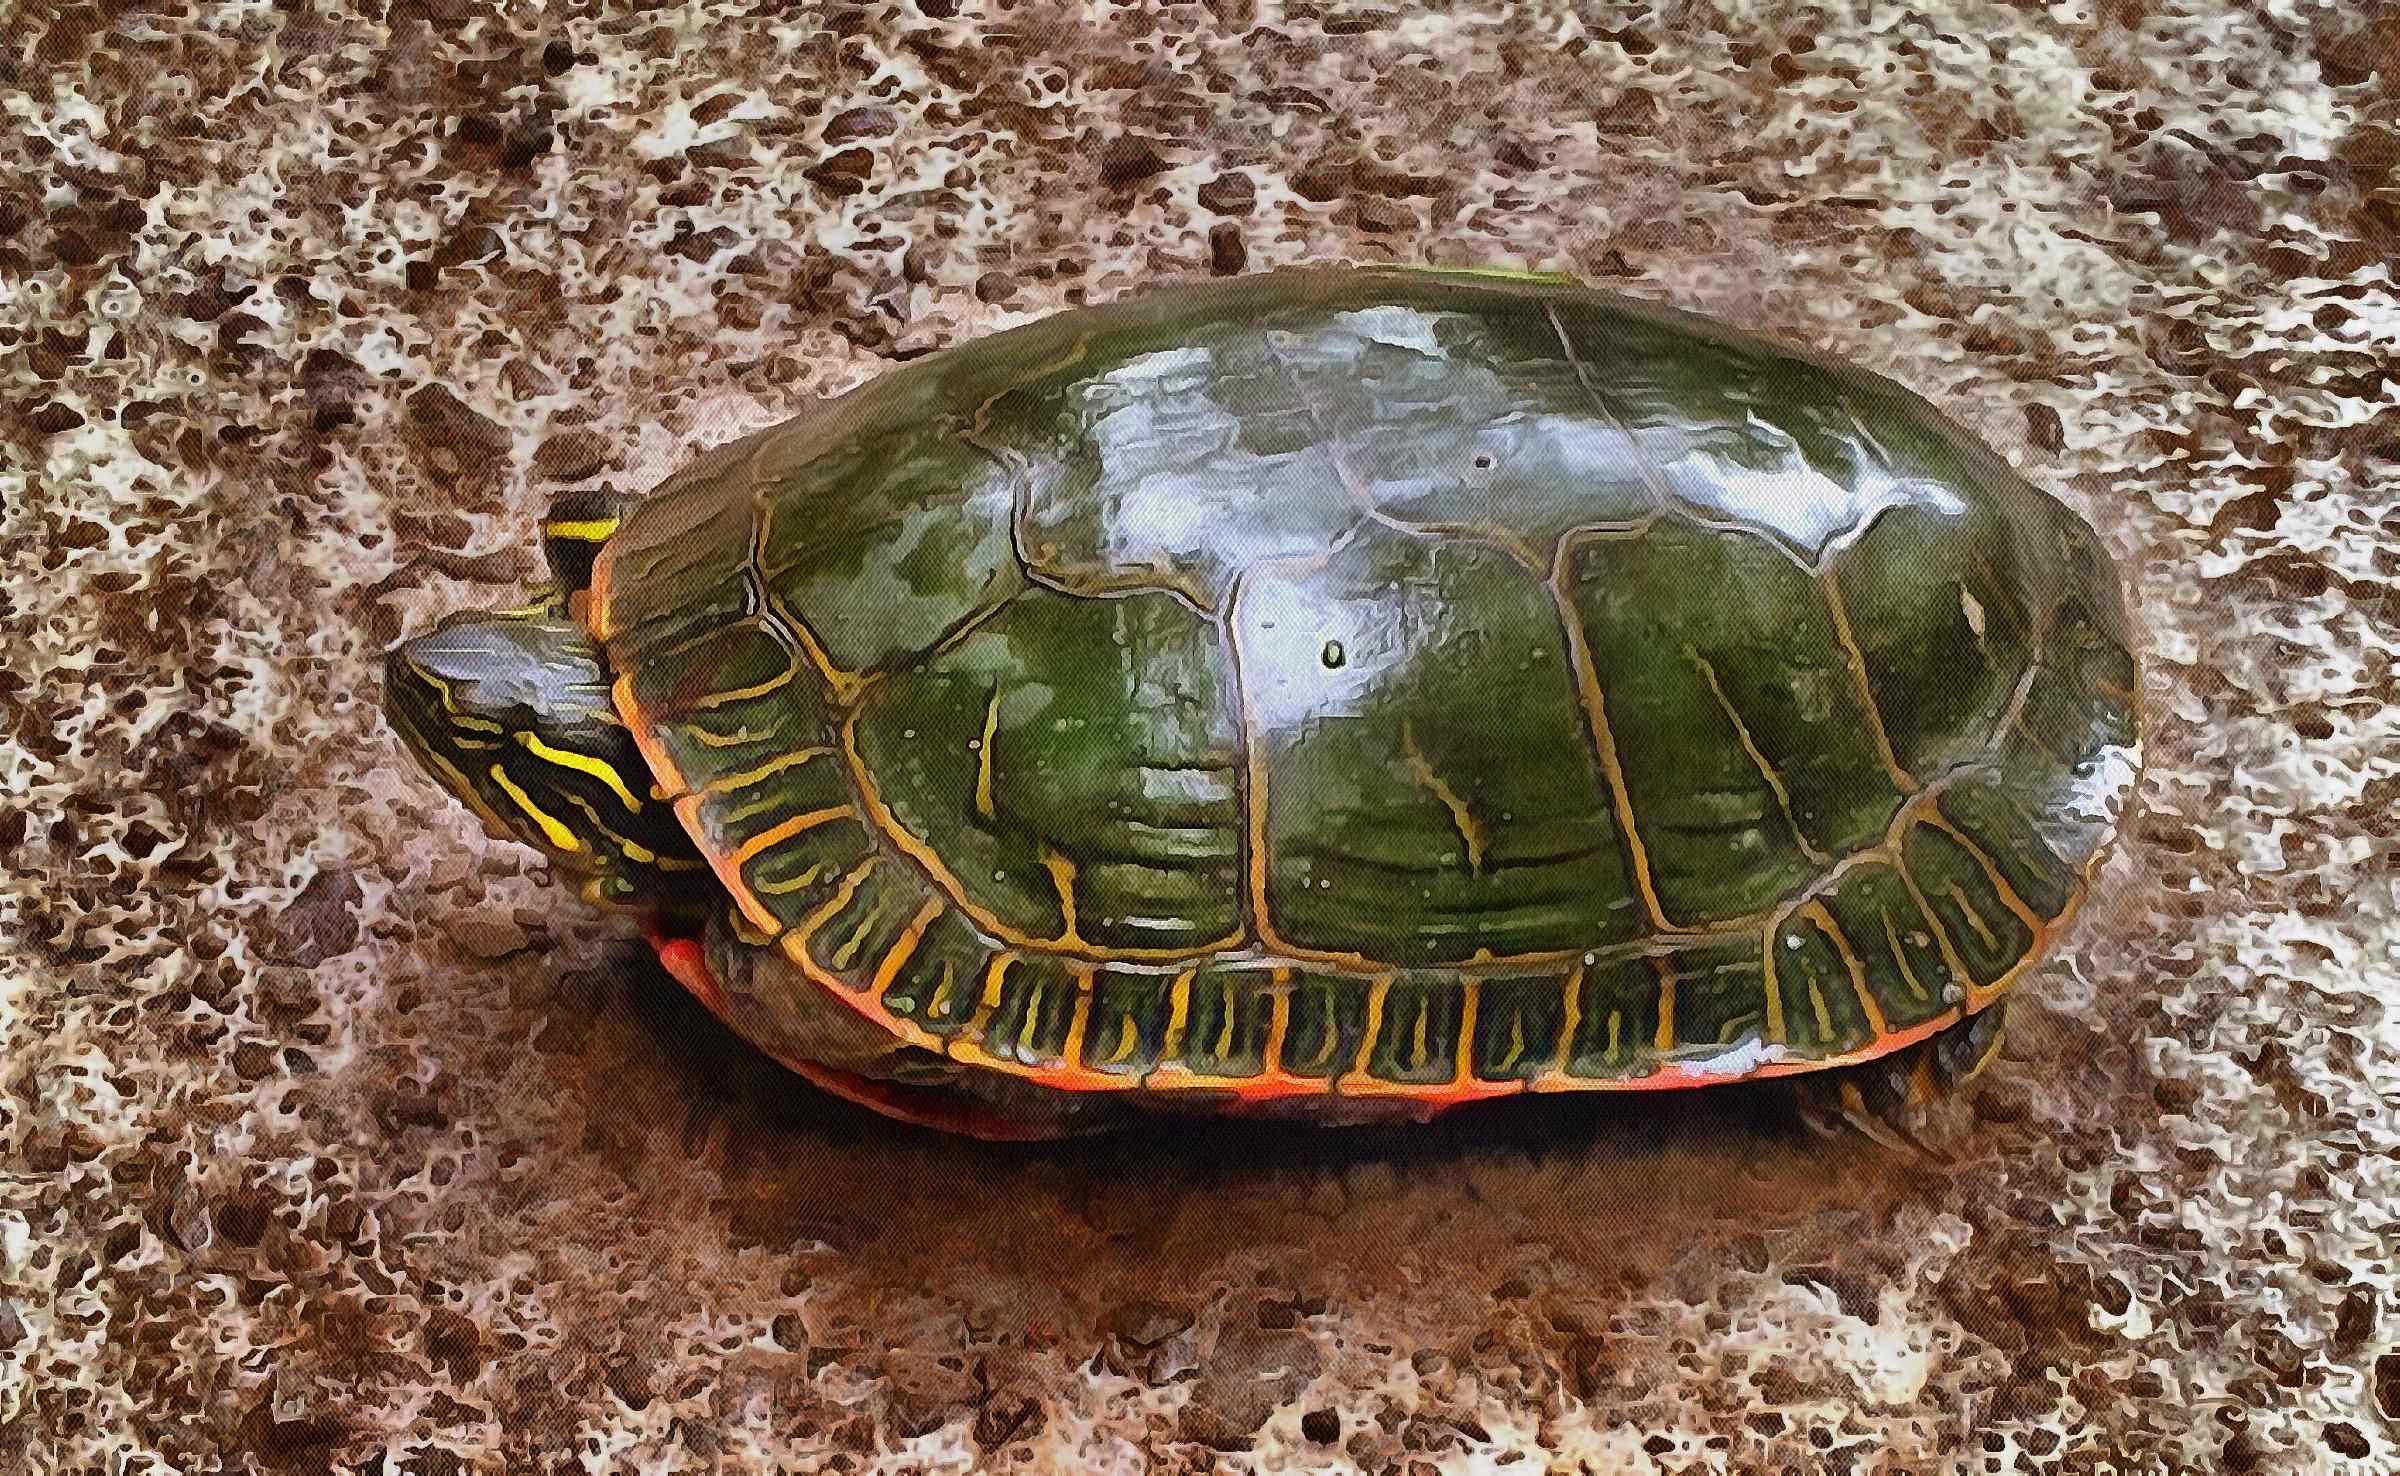 Free Tortoise images, Turtle free images,  –  Turtle stock free images, free images turtles, tortoise public domain images, Turtle public domain images, Tortoise free ,!